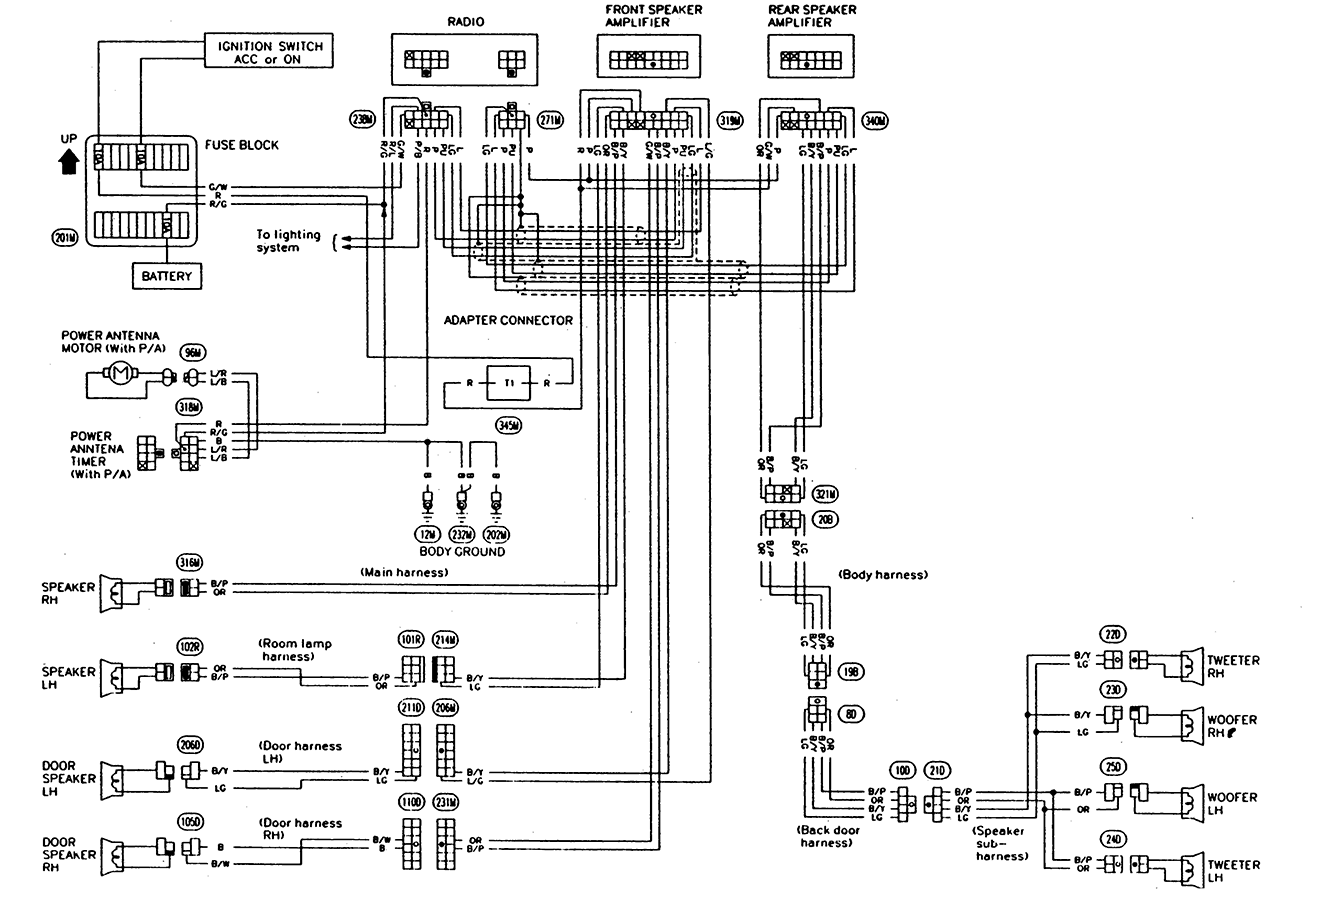 2001 Nissan Frontier Stereo Wiring Diagram from schematron.org